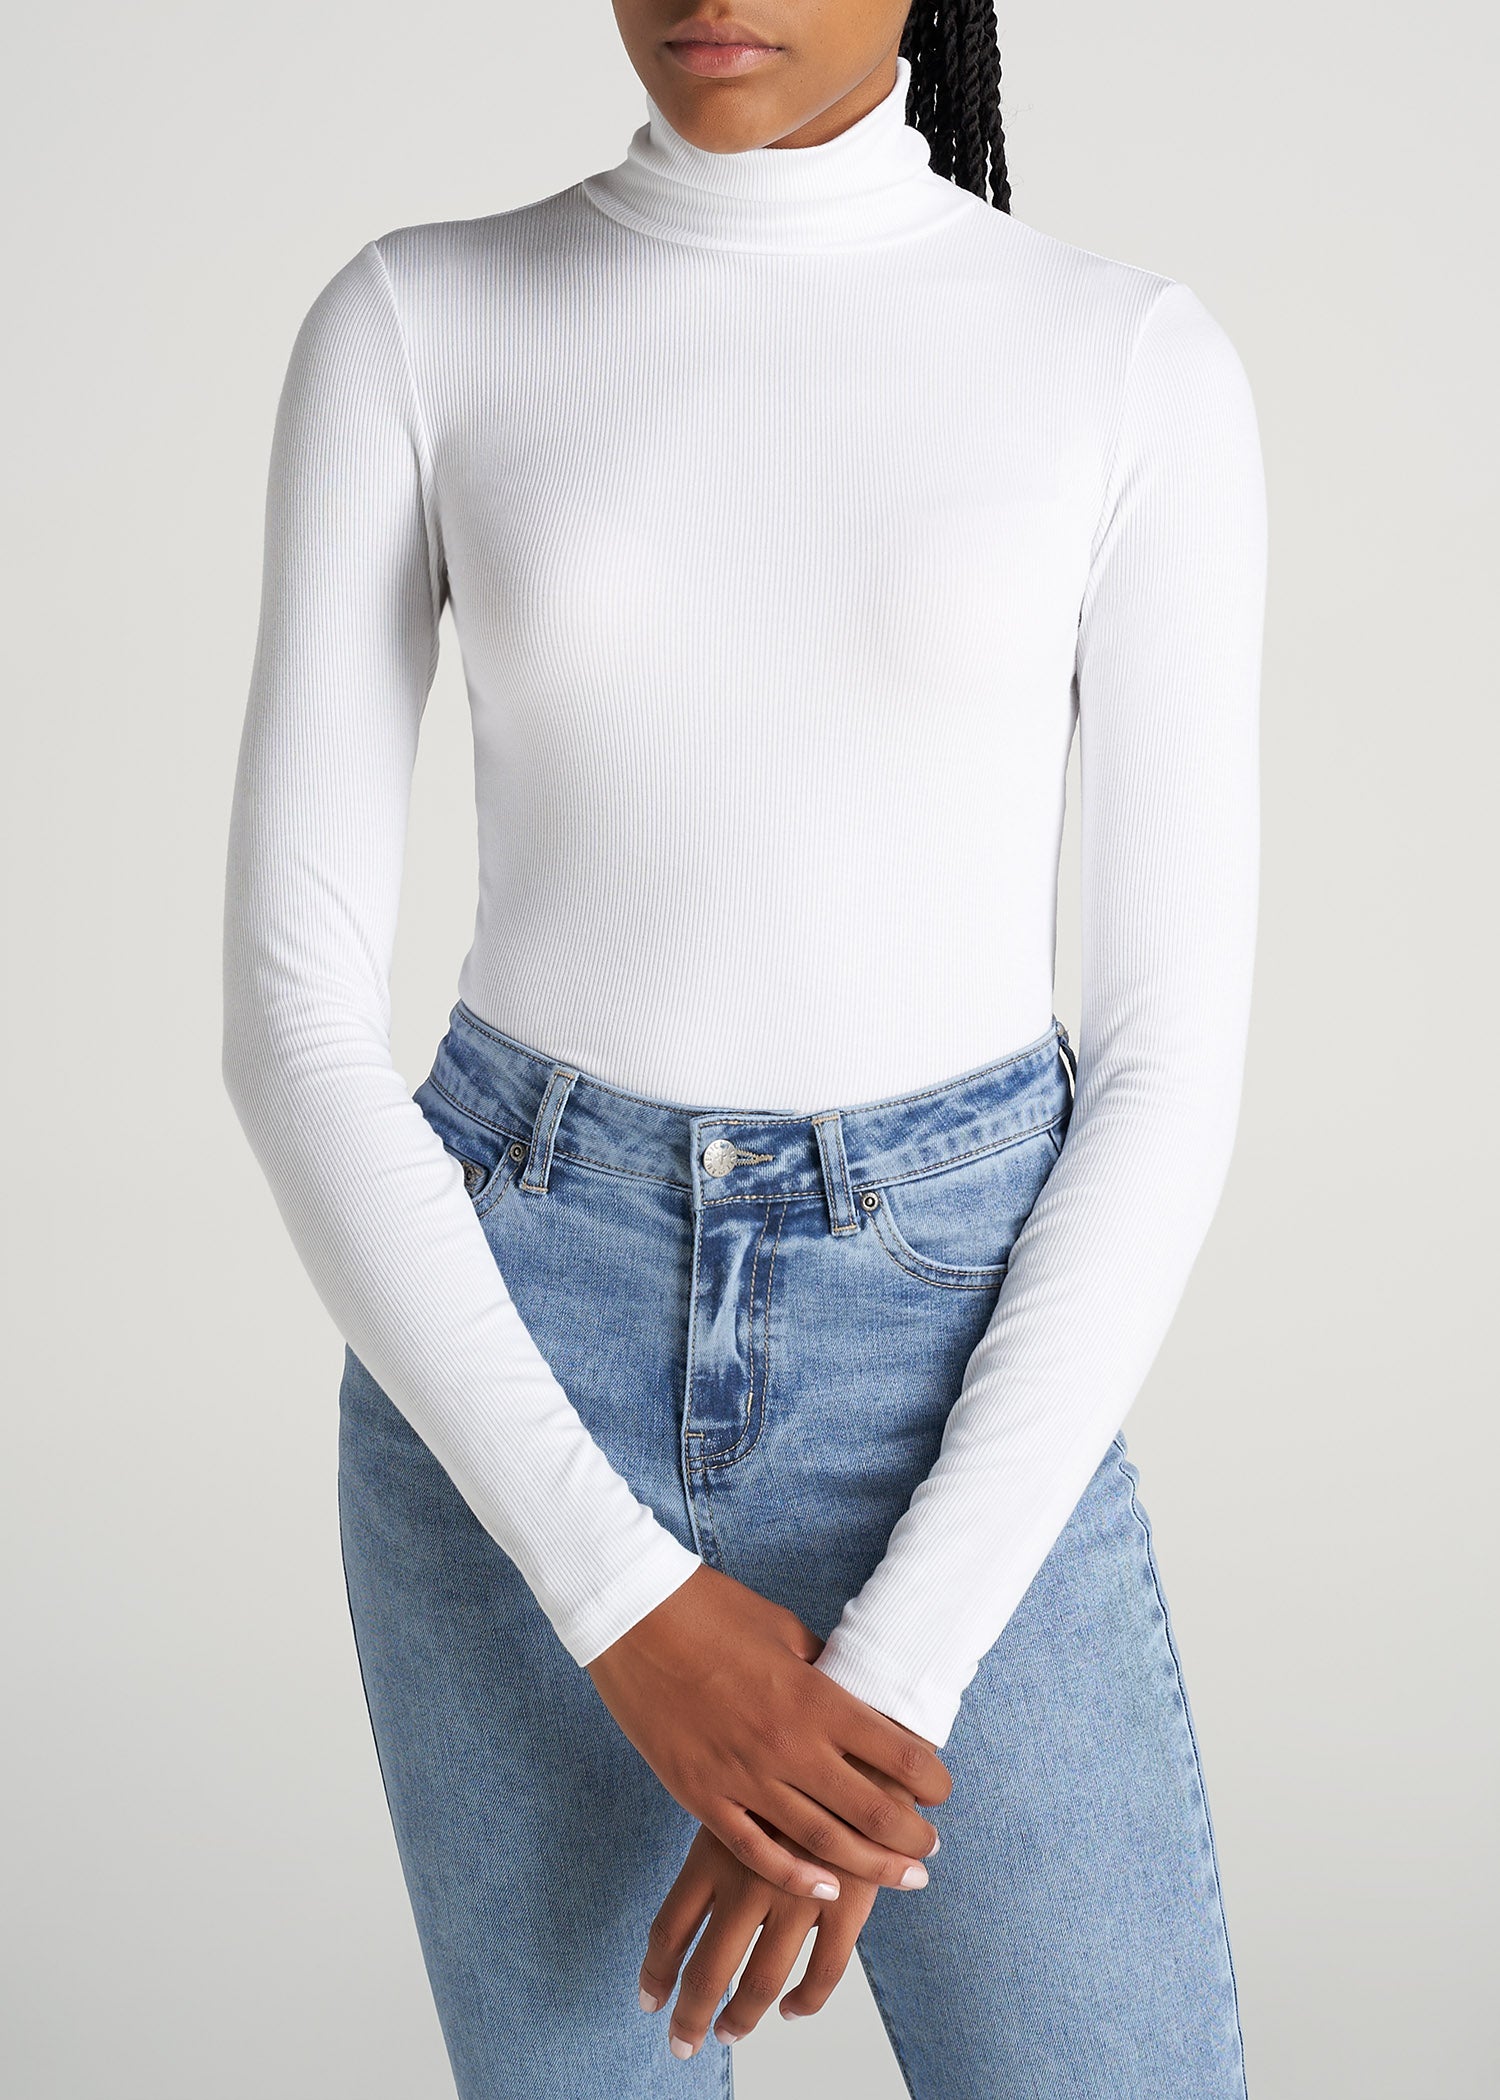 Women's White Rib V Neck Long Sleeve Crop Top - Size 4